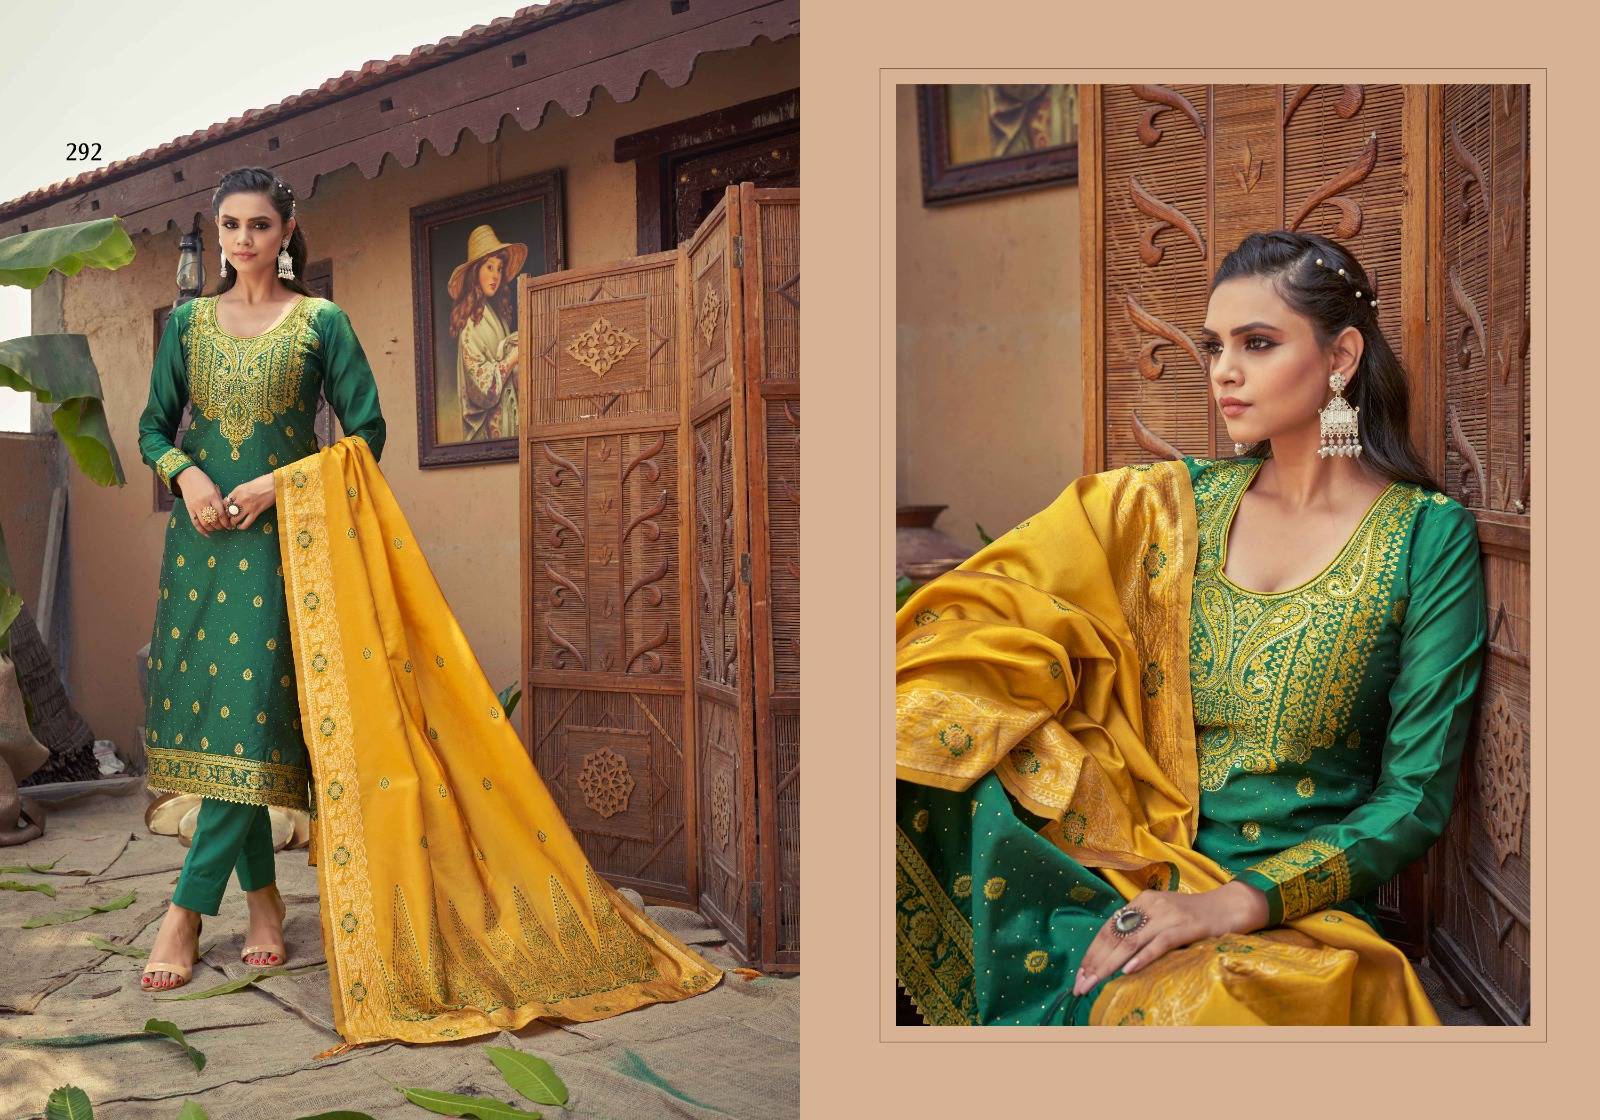 Banarasi Vol-4 By Pc 291 To 294 Series Beautiful Festive Suits Colorful Stylish Fancy Casual Wear & Ethnic Wear Banarasi Silk Dresses At Wholesale Price